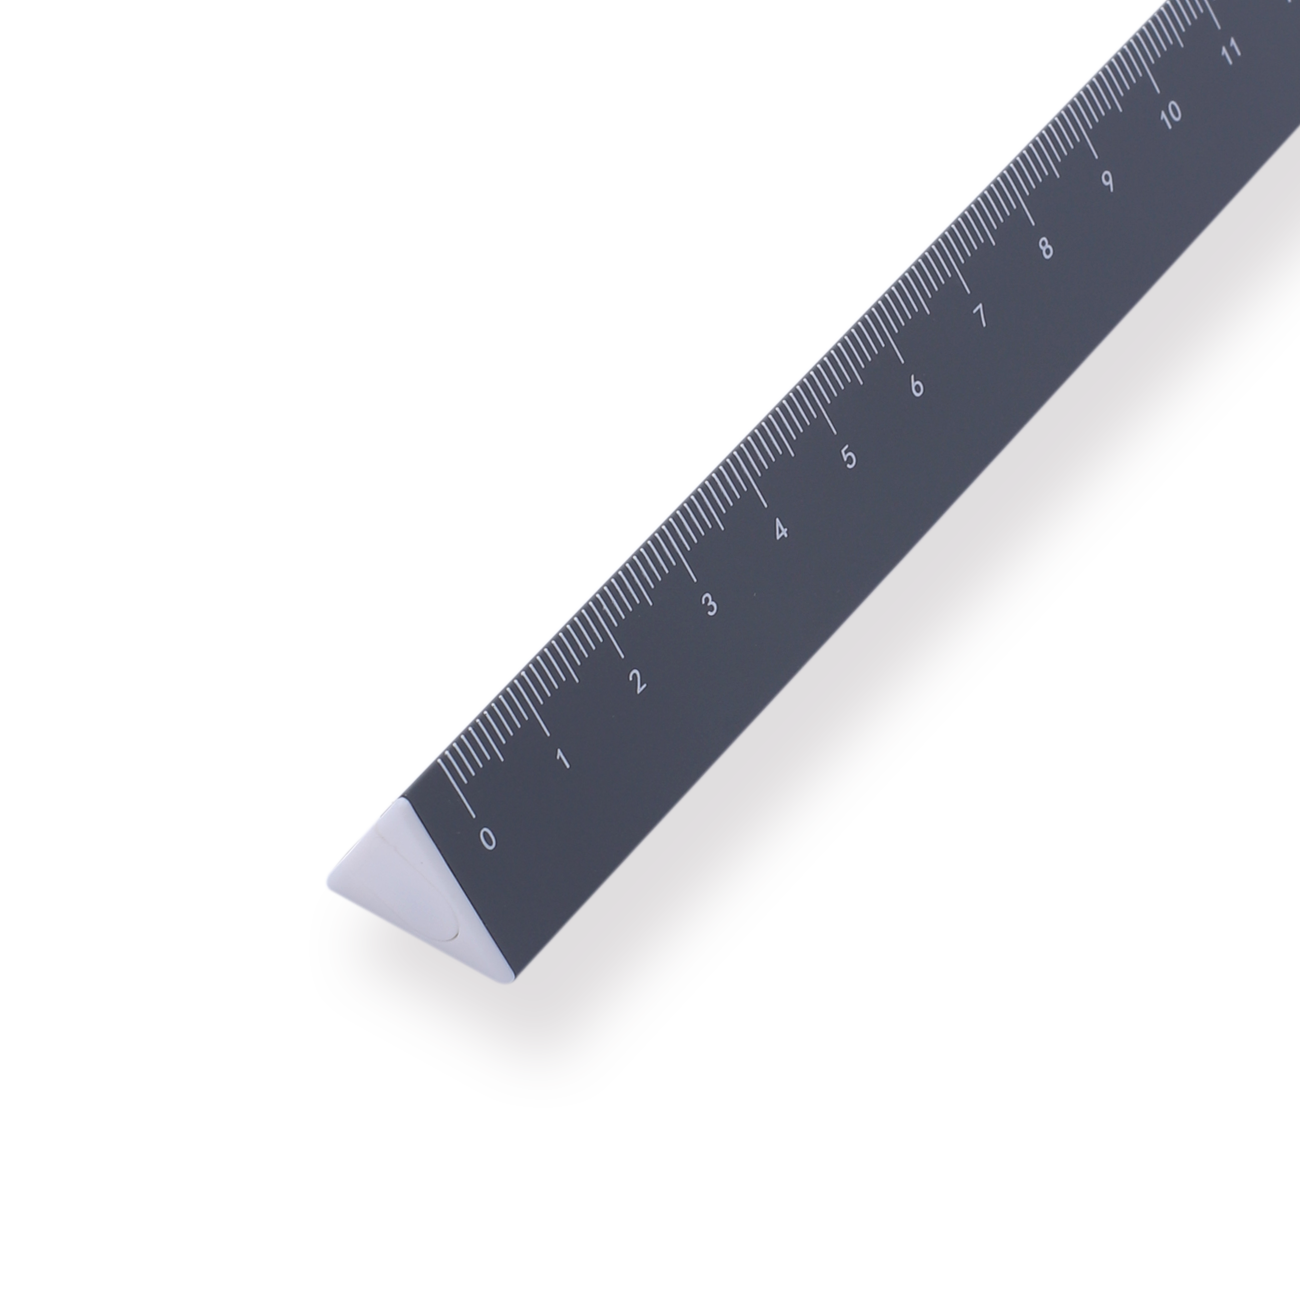 Double Scale Ruler & Pen - Gray